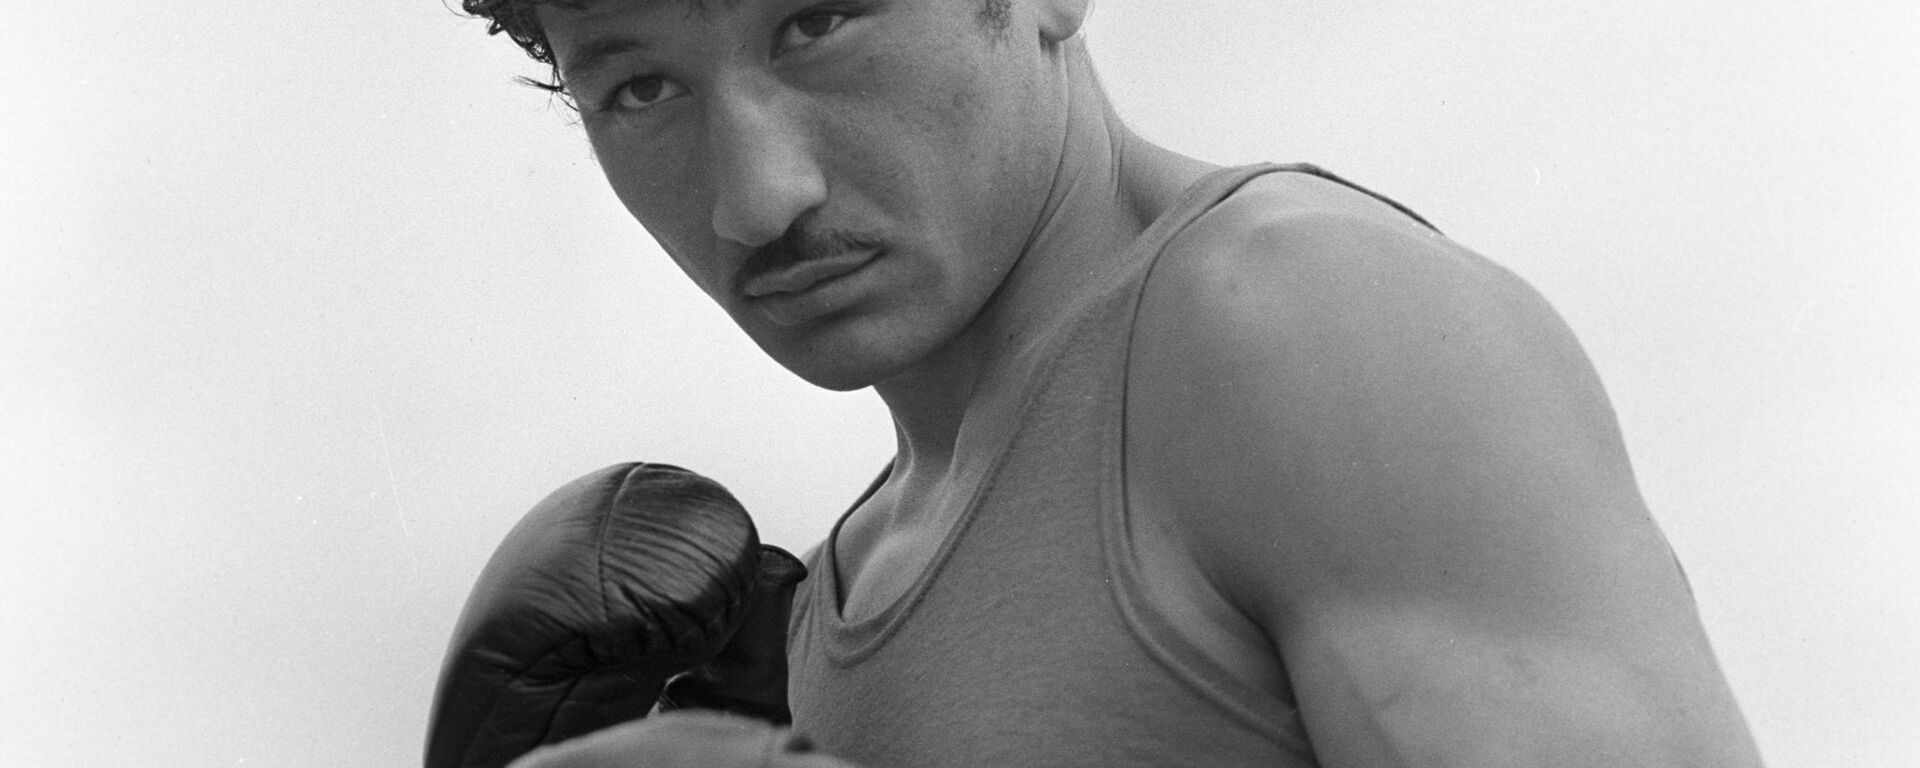 Узбекский боксер Руфат Рискиев - Sputnik Узбекистан, 1920, 22.11.2016